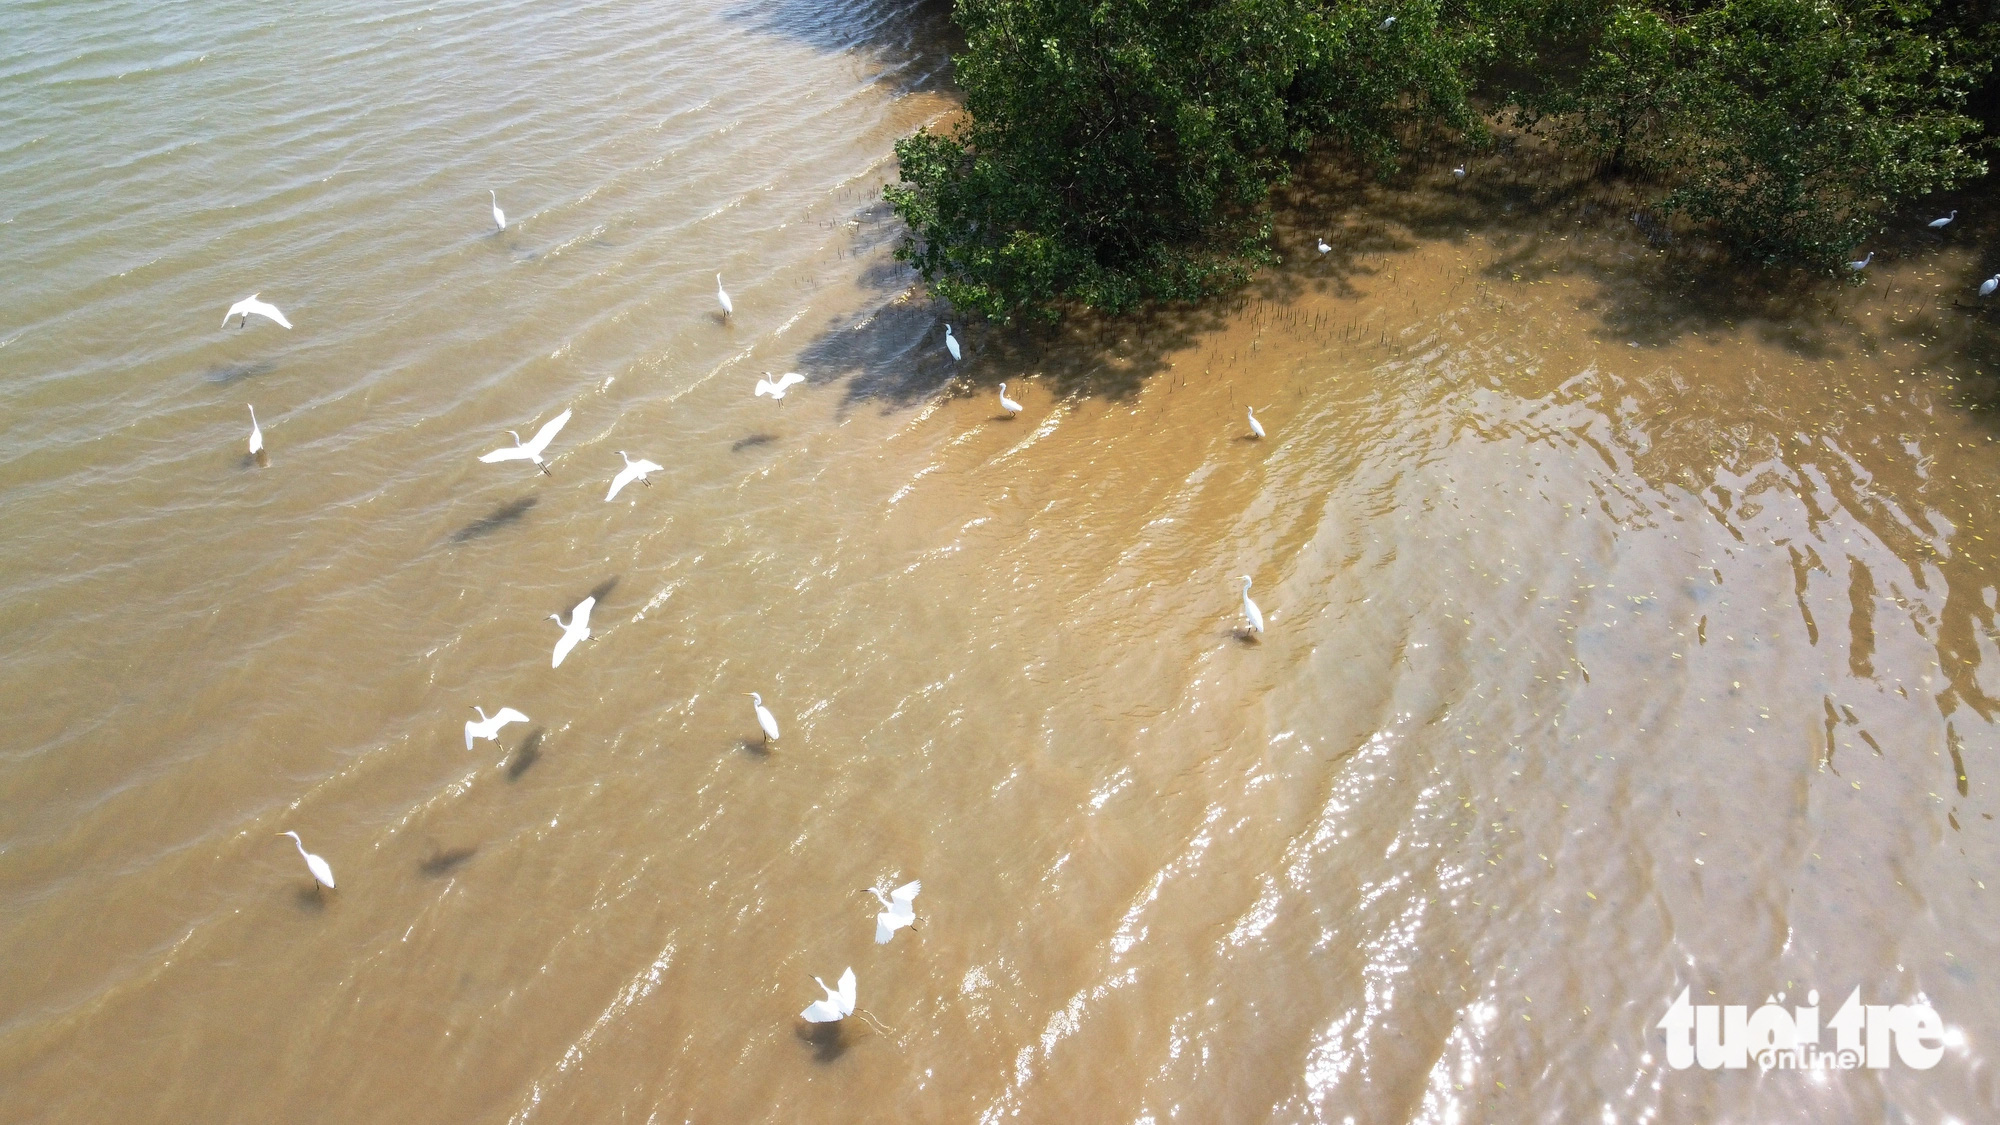 Unique scene: Storks forage on Da Nang’s river